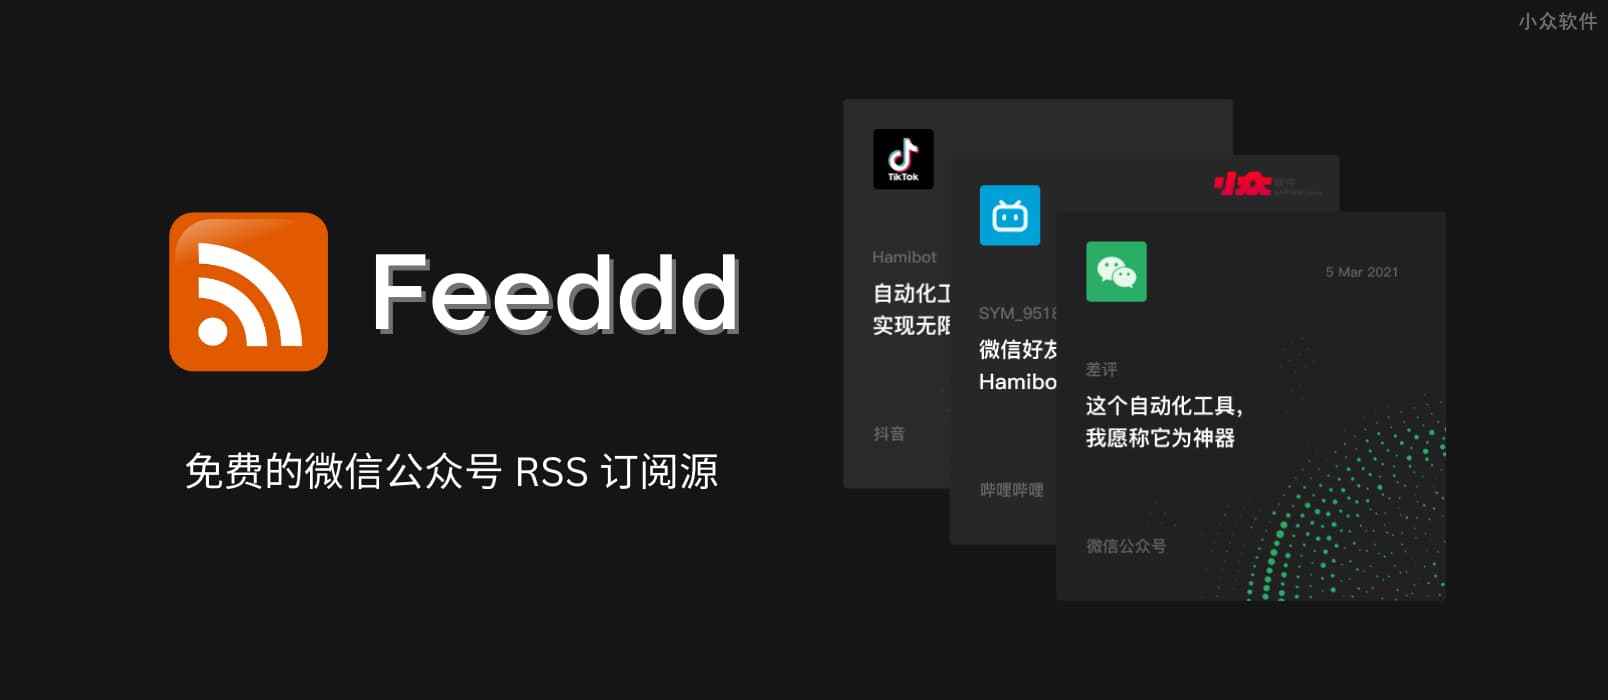 Feeddd - 分布式，免费的微信公众号 RSS 订阅源，已超过 30000+ 微信公众号